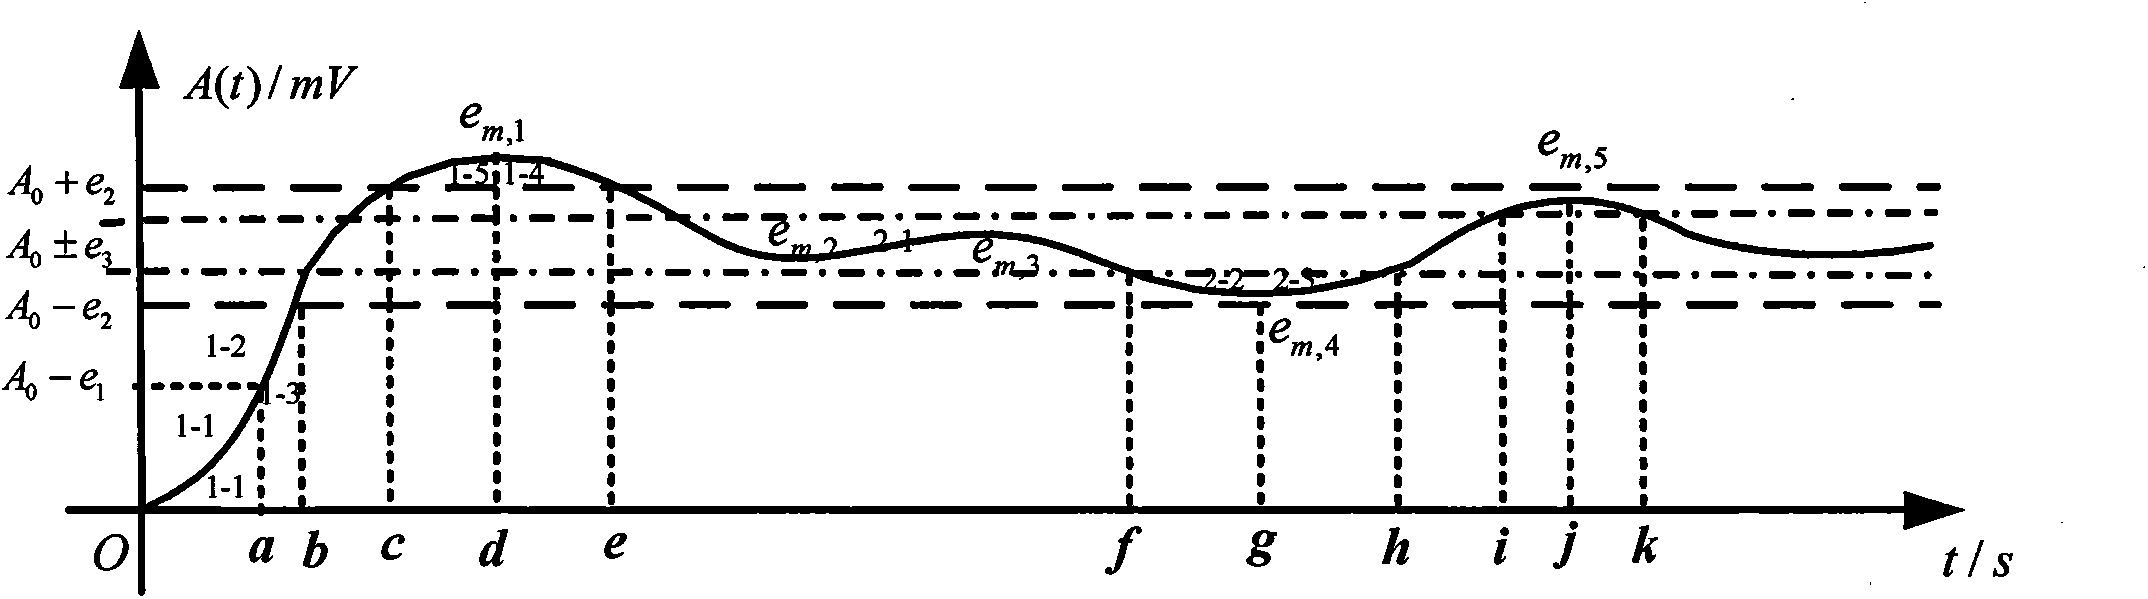 Humanoid intelligent control method for vibration amplitude of Coriolis mass flowmeter